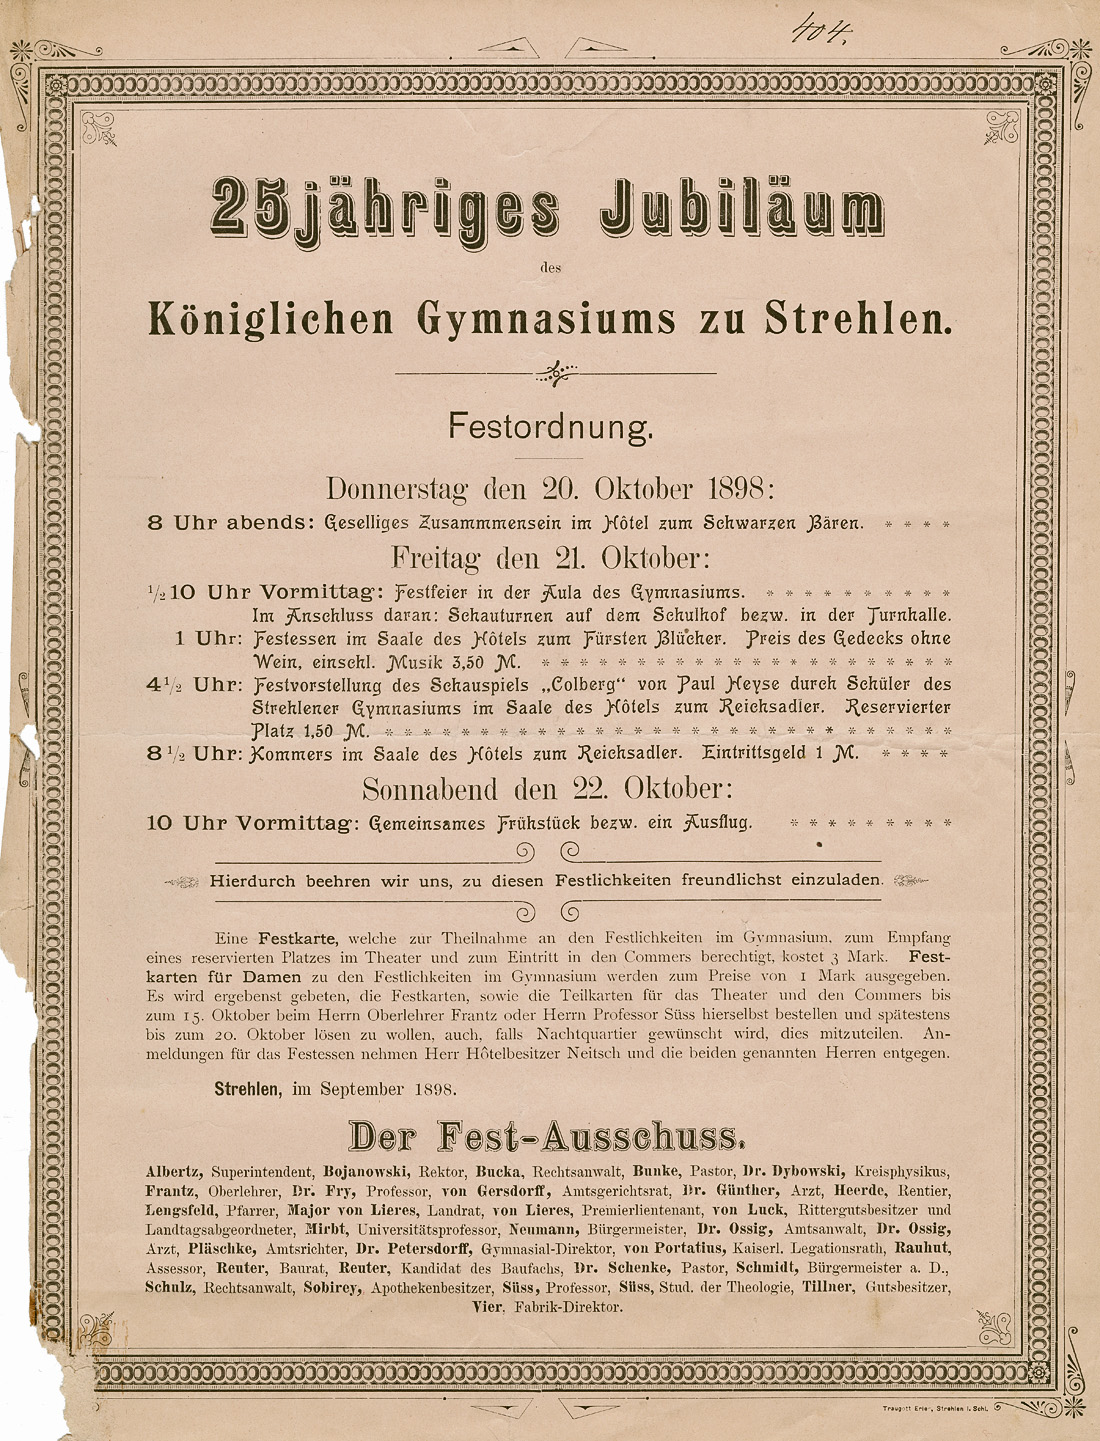 Gymnasium Festordnung 1898